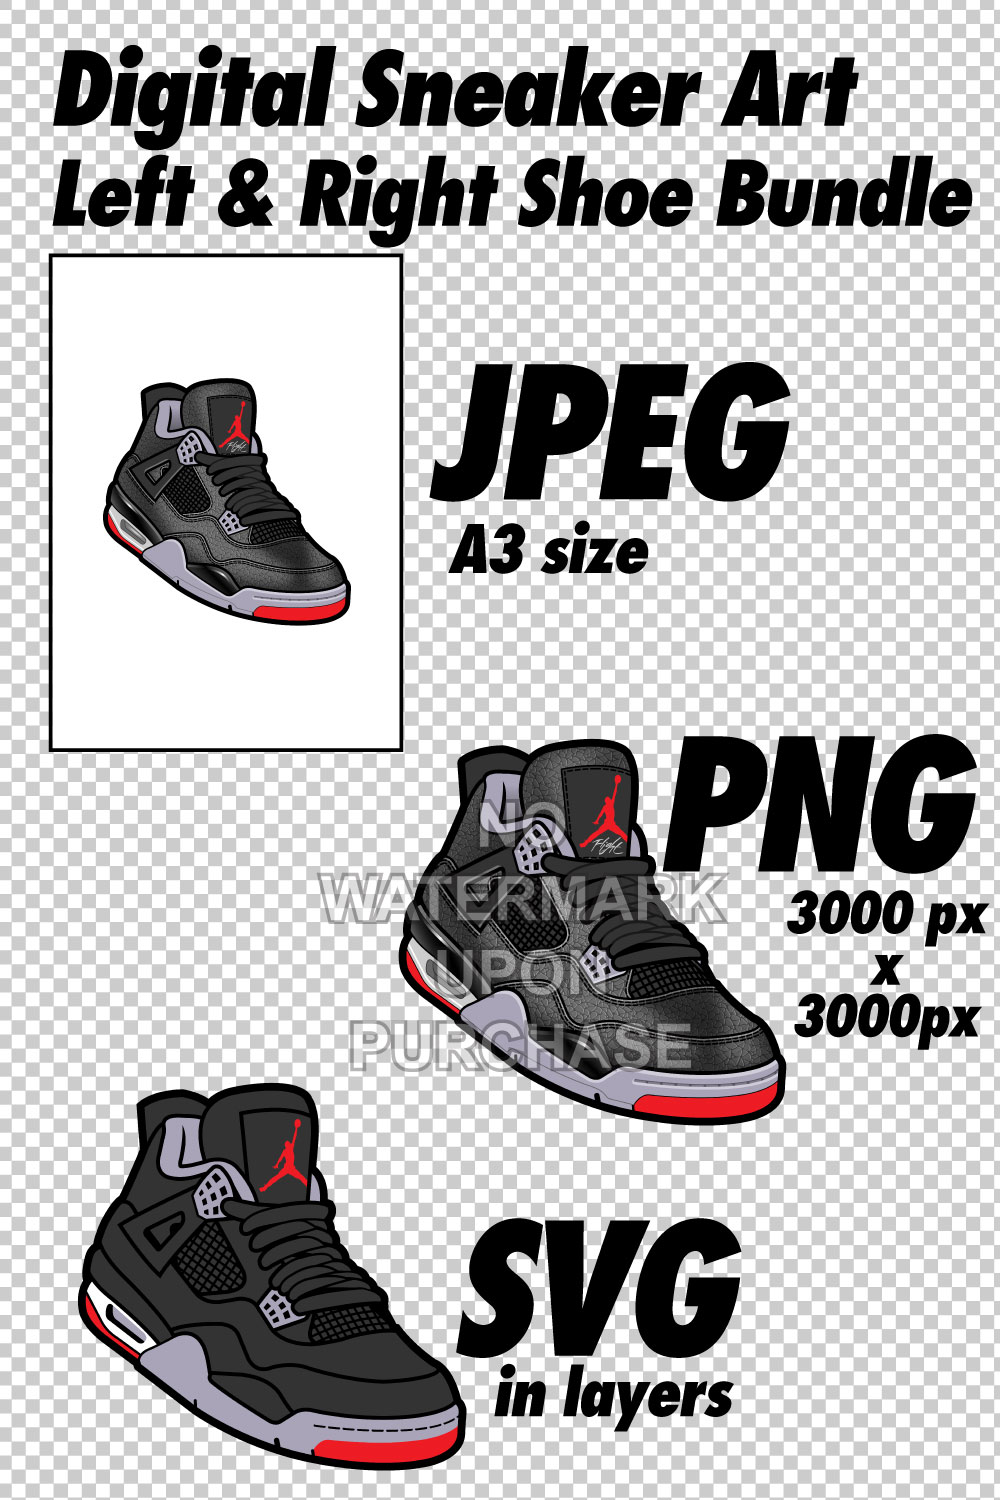 Air Jordan 4 Bred Reimagined JPEG PNG SVG Sneaker Art right & left shoe bundle pinterest preview image.